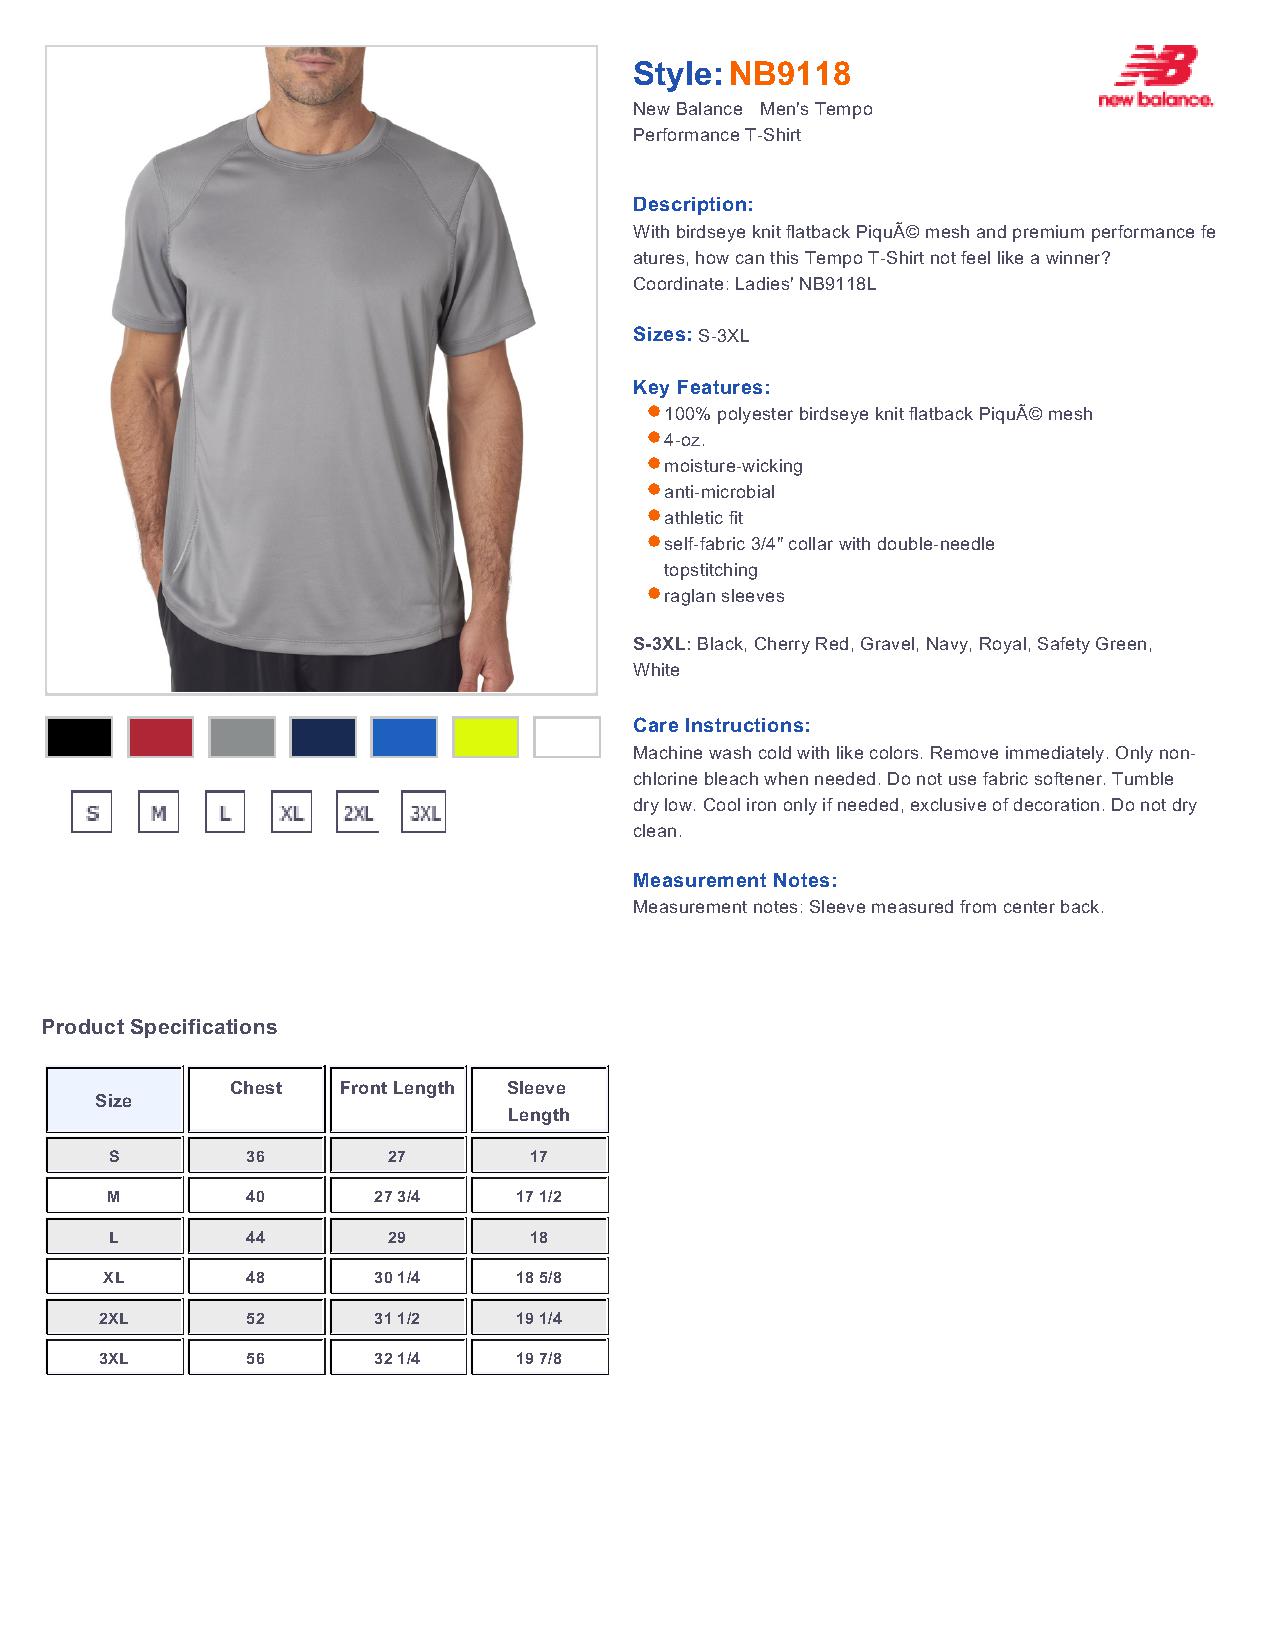 New Balance NB9118 - Men's Tempo Performance T-Shirt $9.35 - Men's T-Shirts